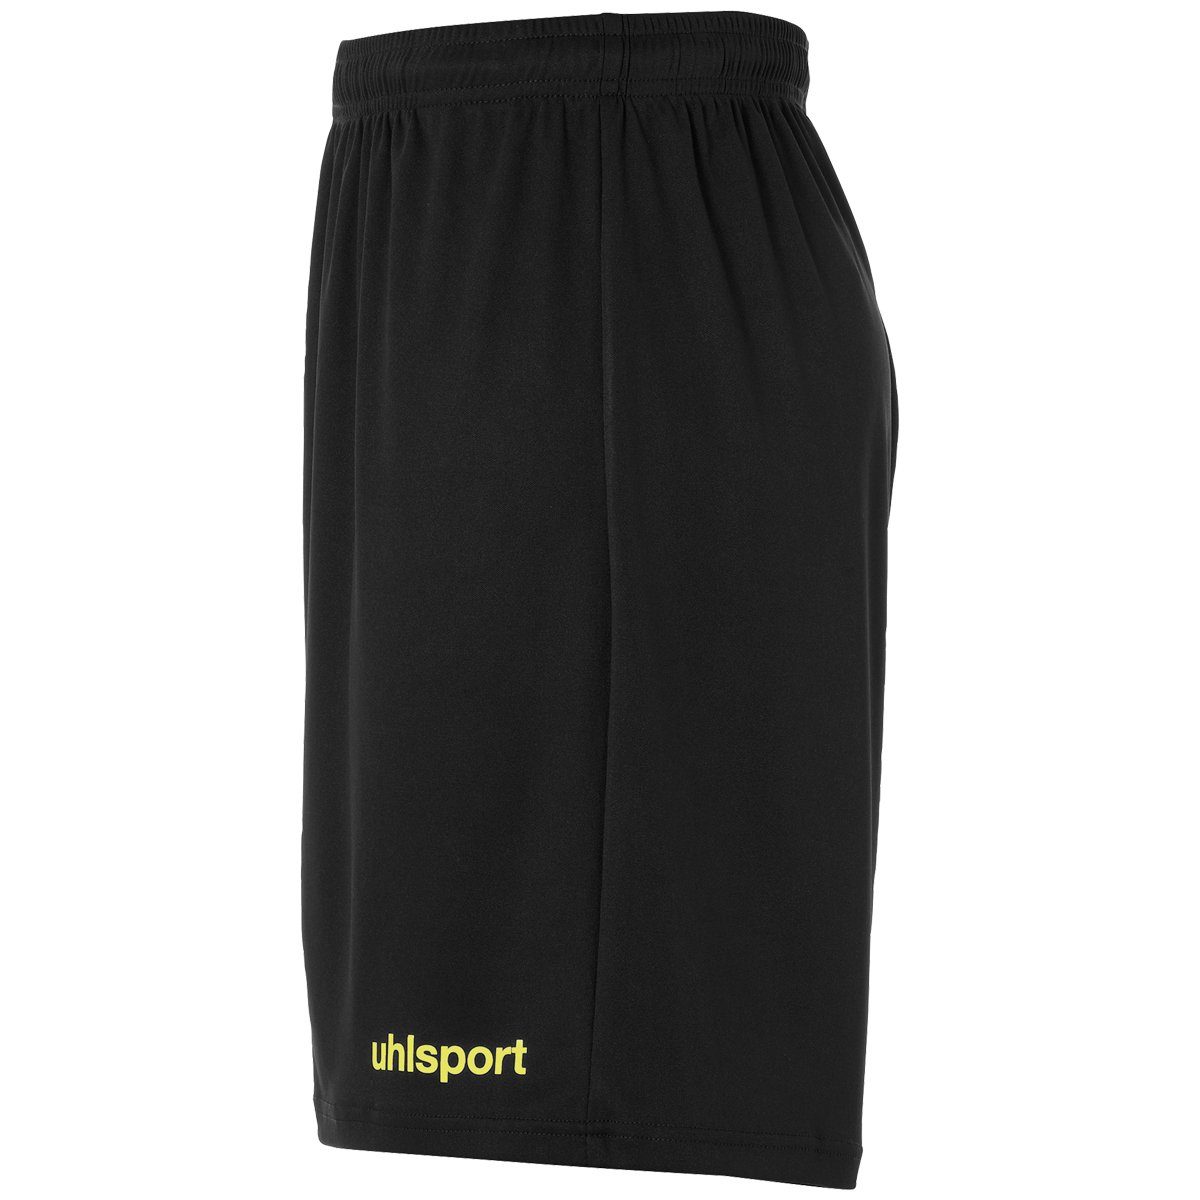 Shorts Shorts schwarz/fluo uhlsport uhlsport gelb